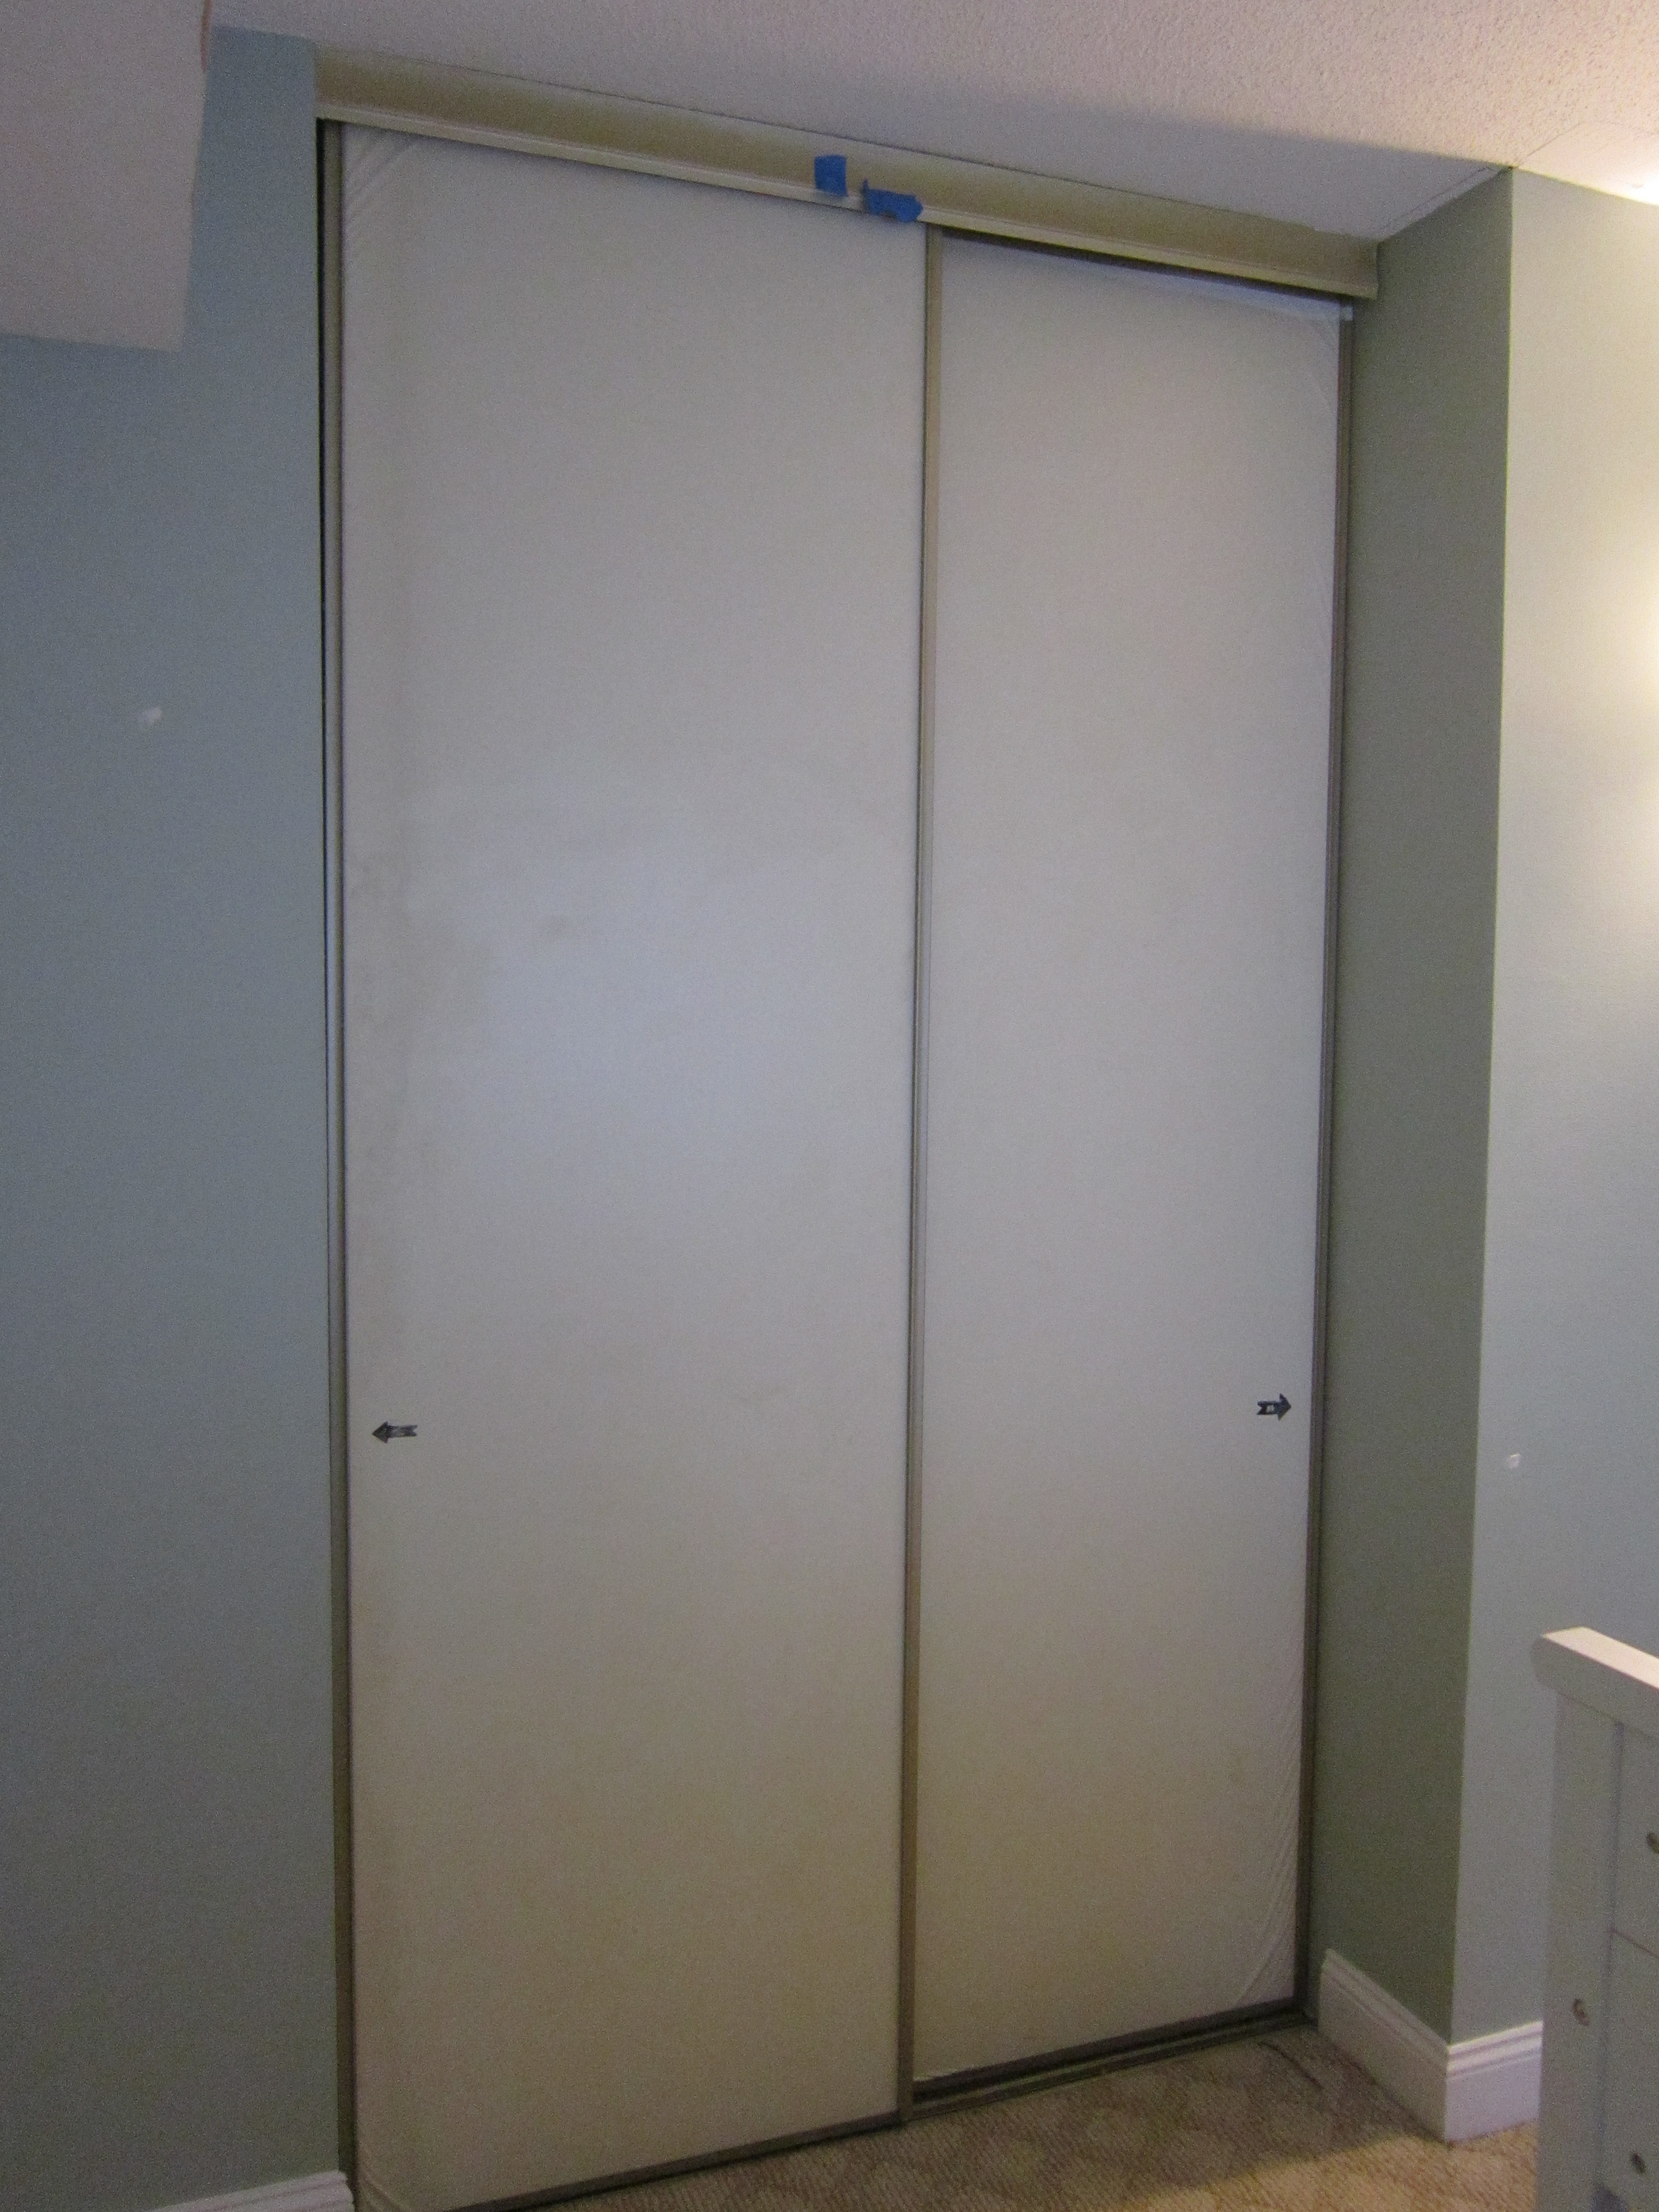 Updating Old Sliding Closet Doors Sliding Doors